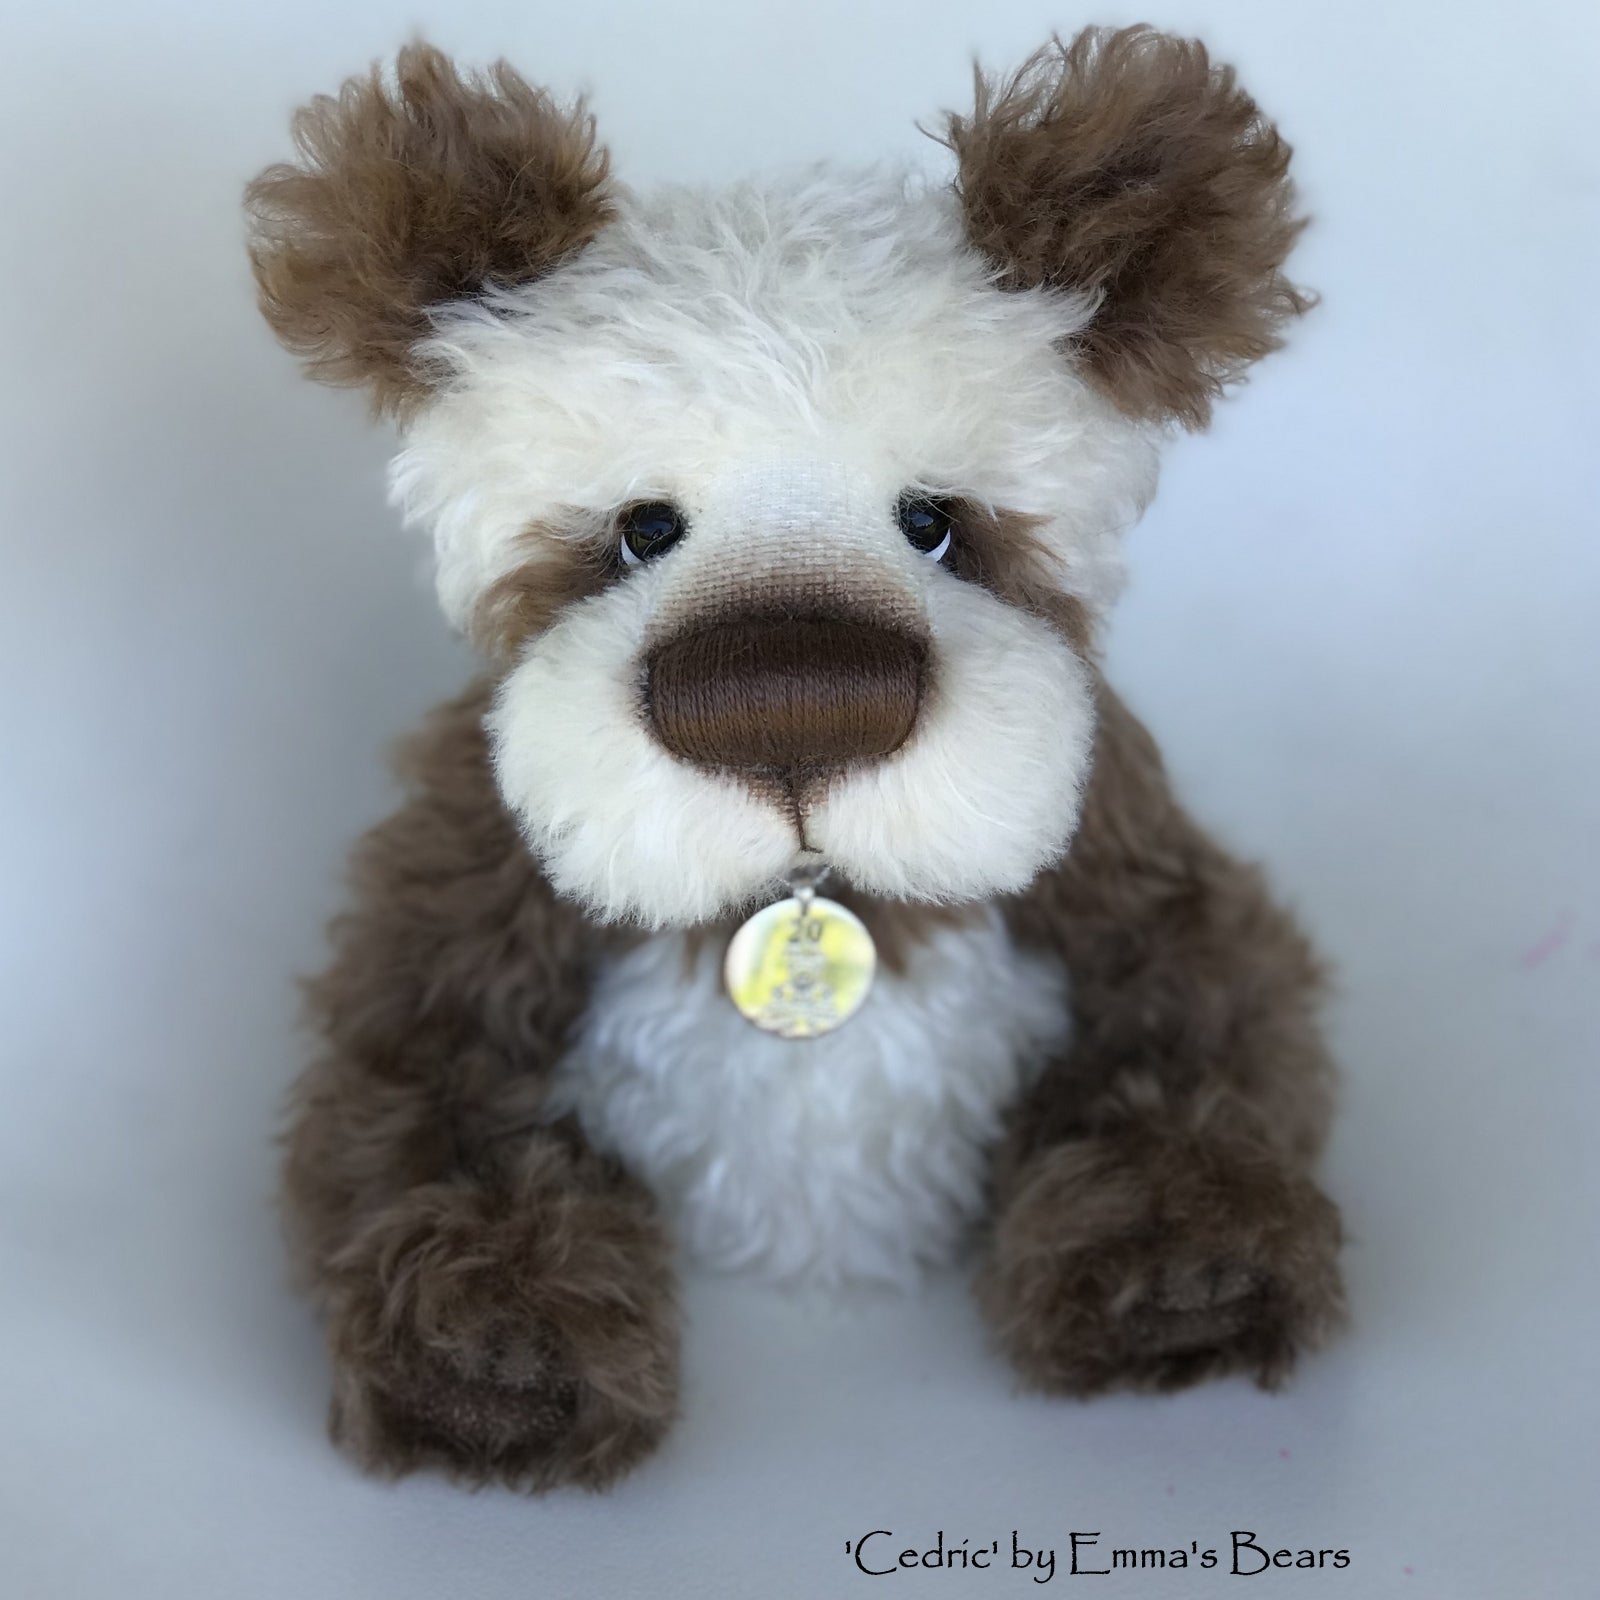 Cedric - 20 Years of Emma's Bears Commemorative Teddy - OOAK in a series